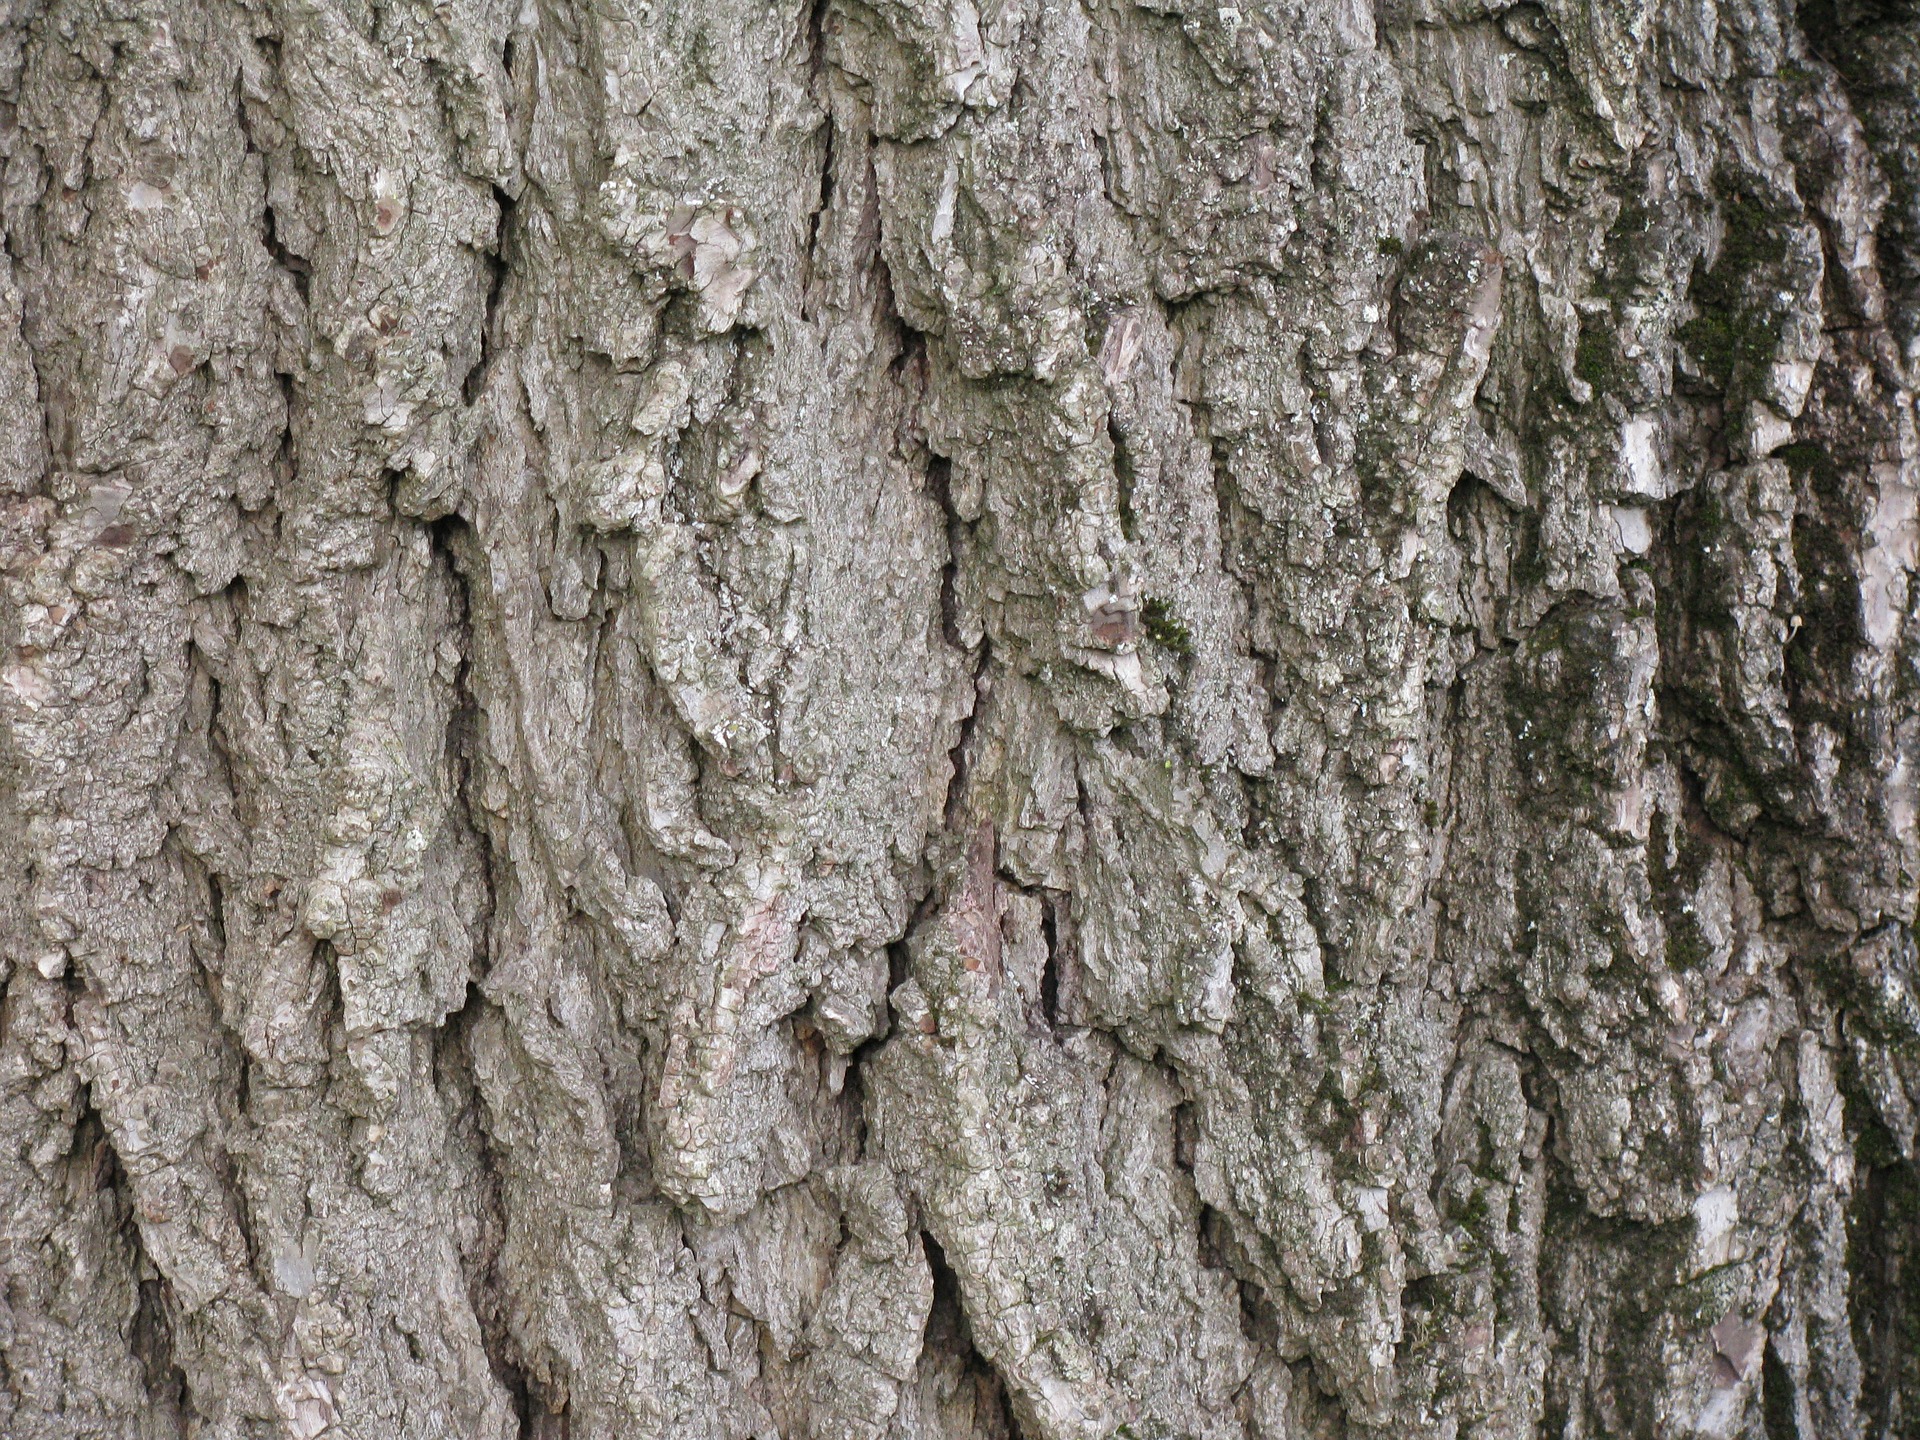 black walnut bark is distinctive